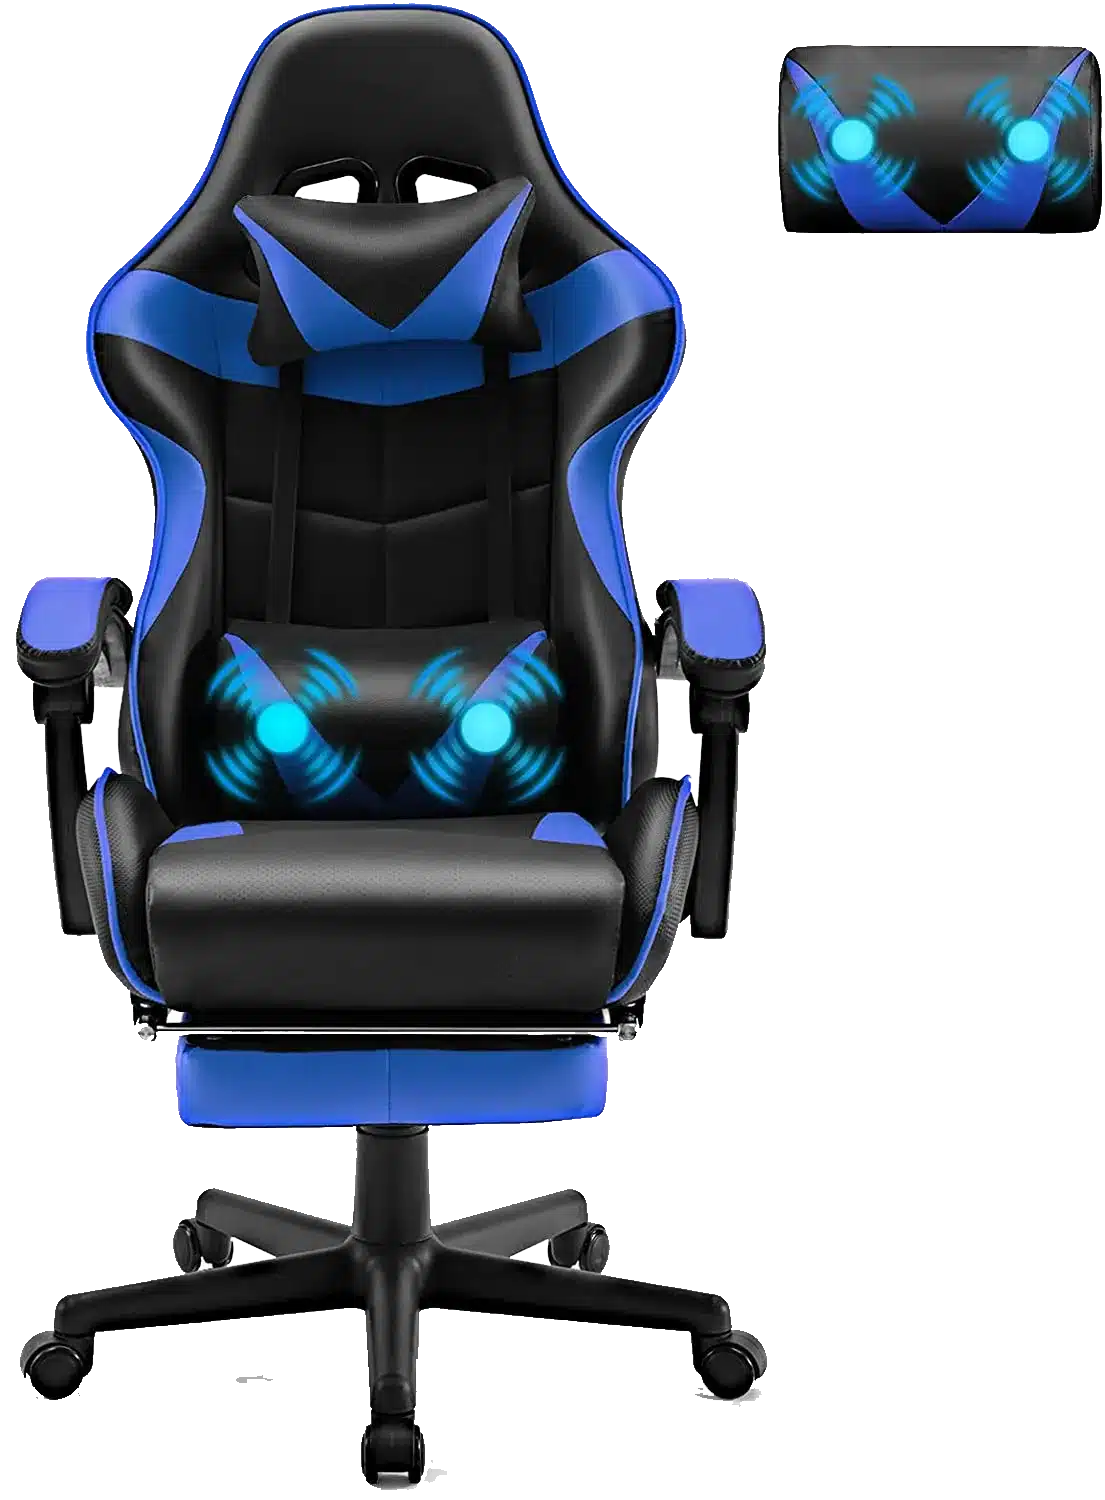 Sedia da Gaming Massaggiante Soontrans, colore Blu